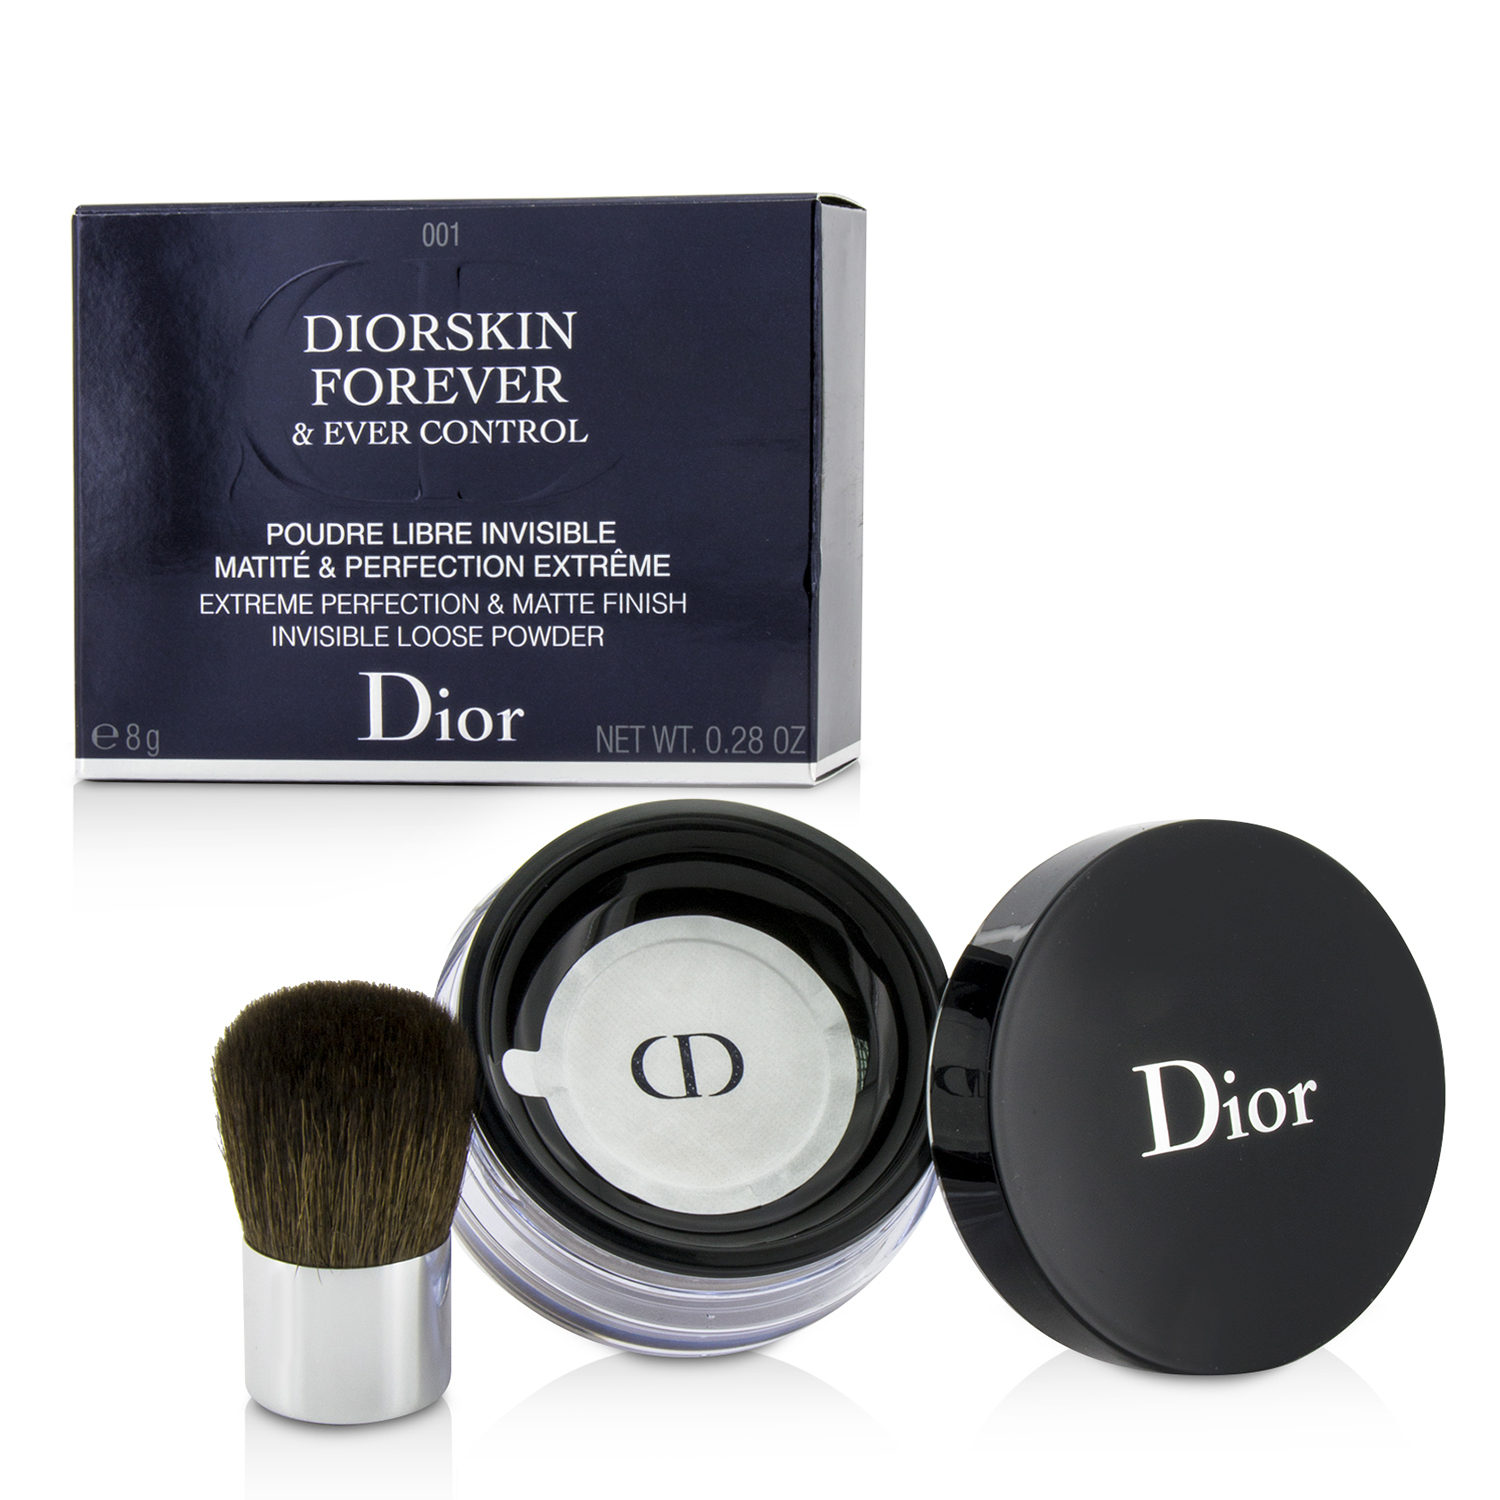 Diorskin Forever  Ever Control Loose Powder - # 001 Christian Dior Image